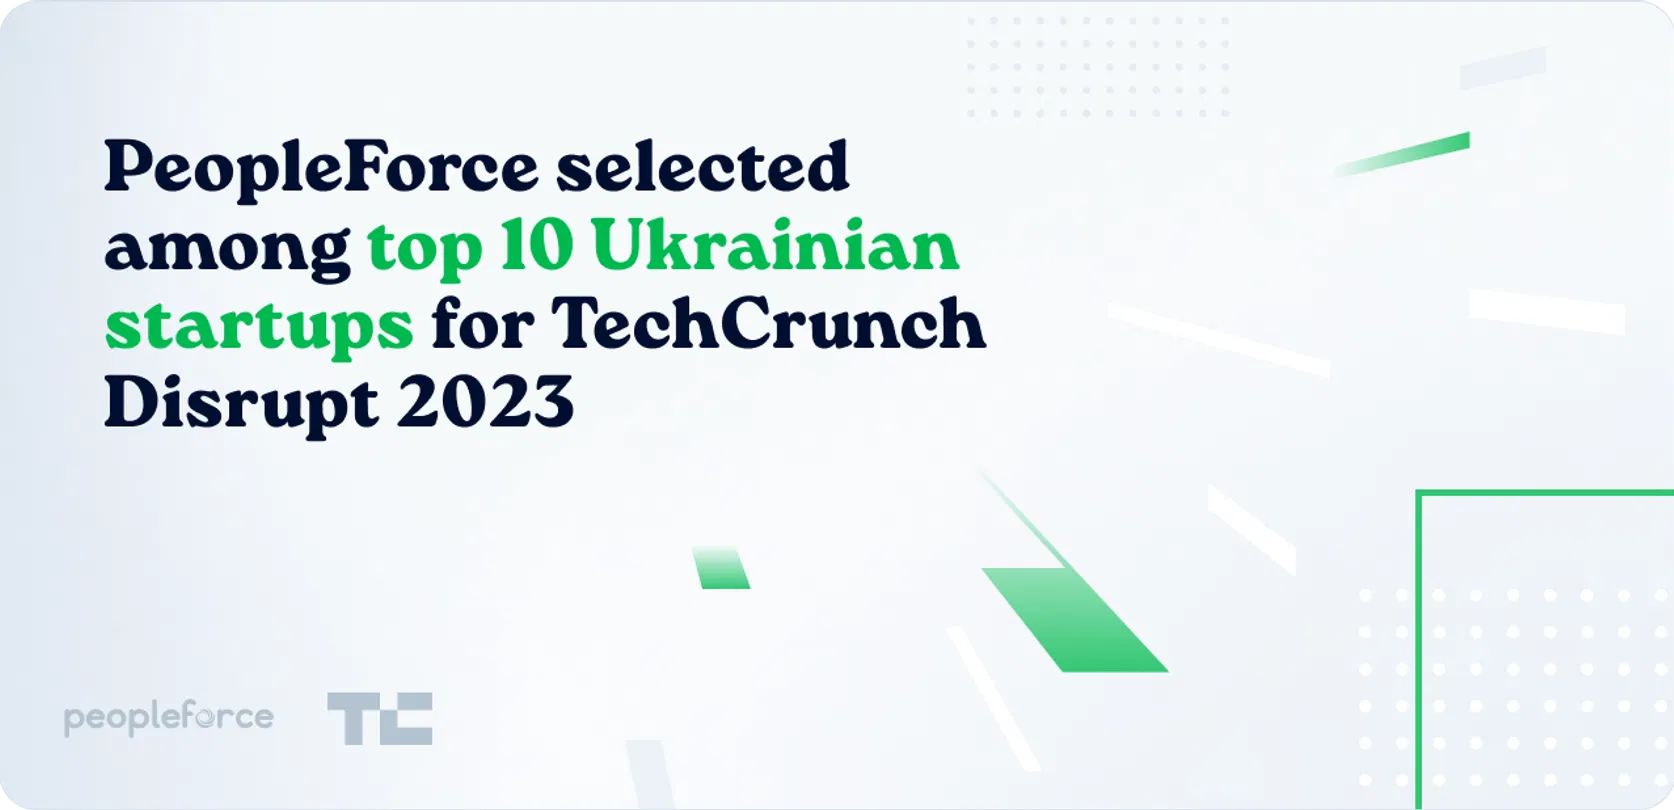 PeopleForce selected among top 10 Ukrainian startups for TechCrunch Disrupt 2023